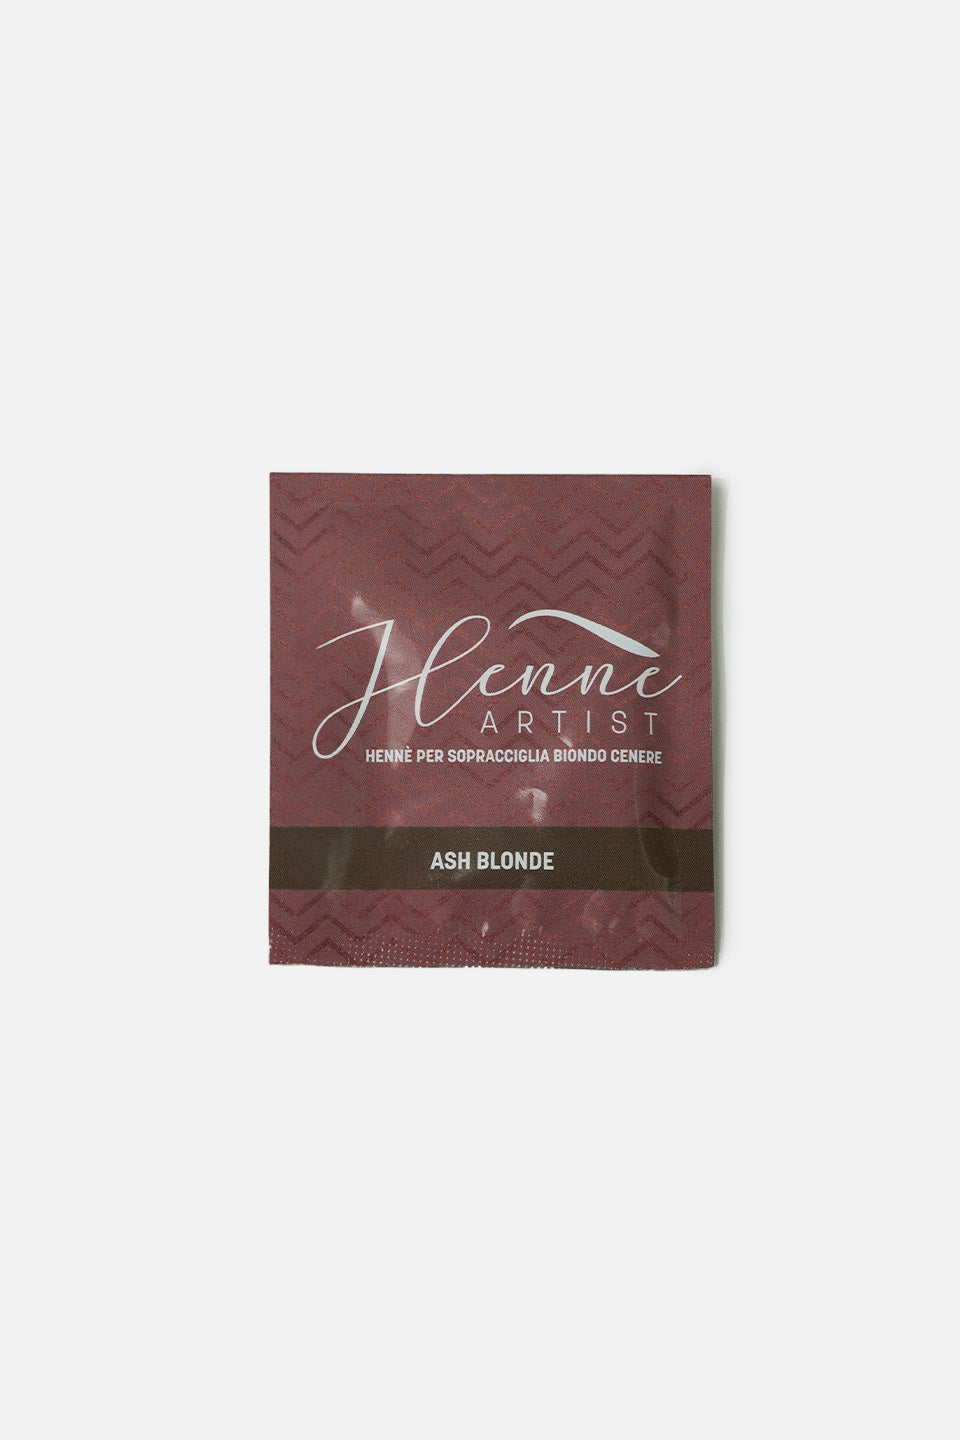 Kit completo per hennè sopracciglia - HENNÈ ARTIST